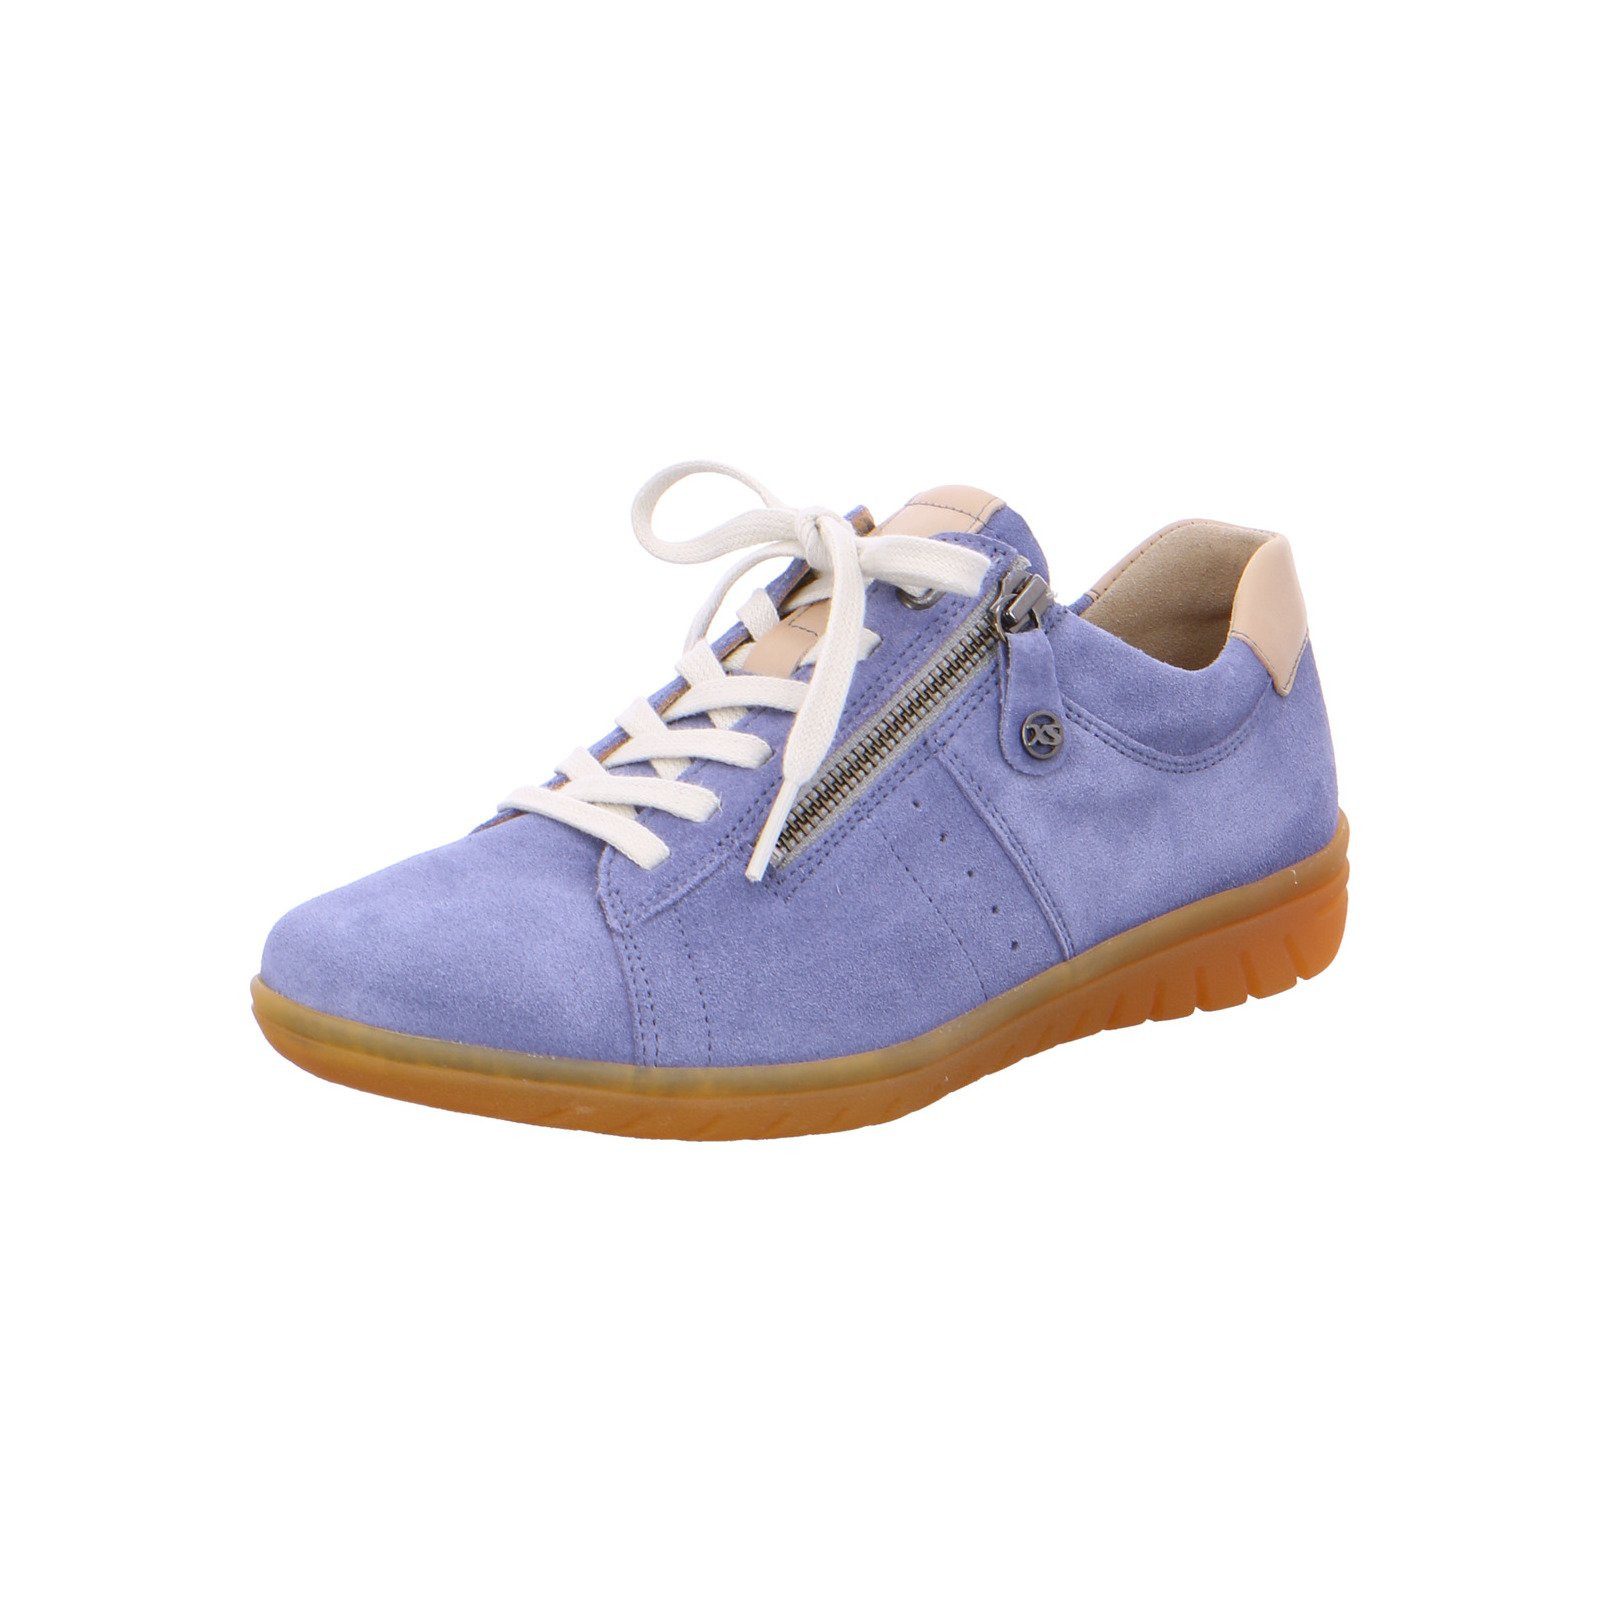 Hartjes XS Casual - Damen Schuhe Schnürschuh blau